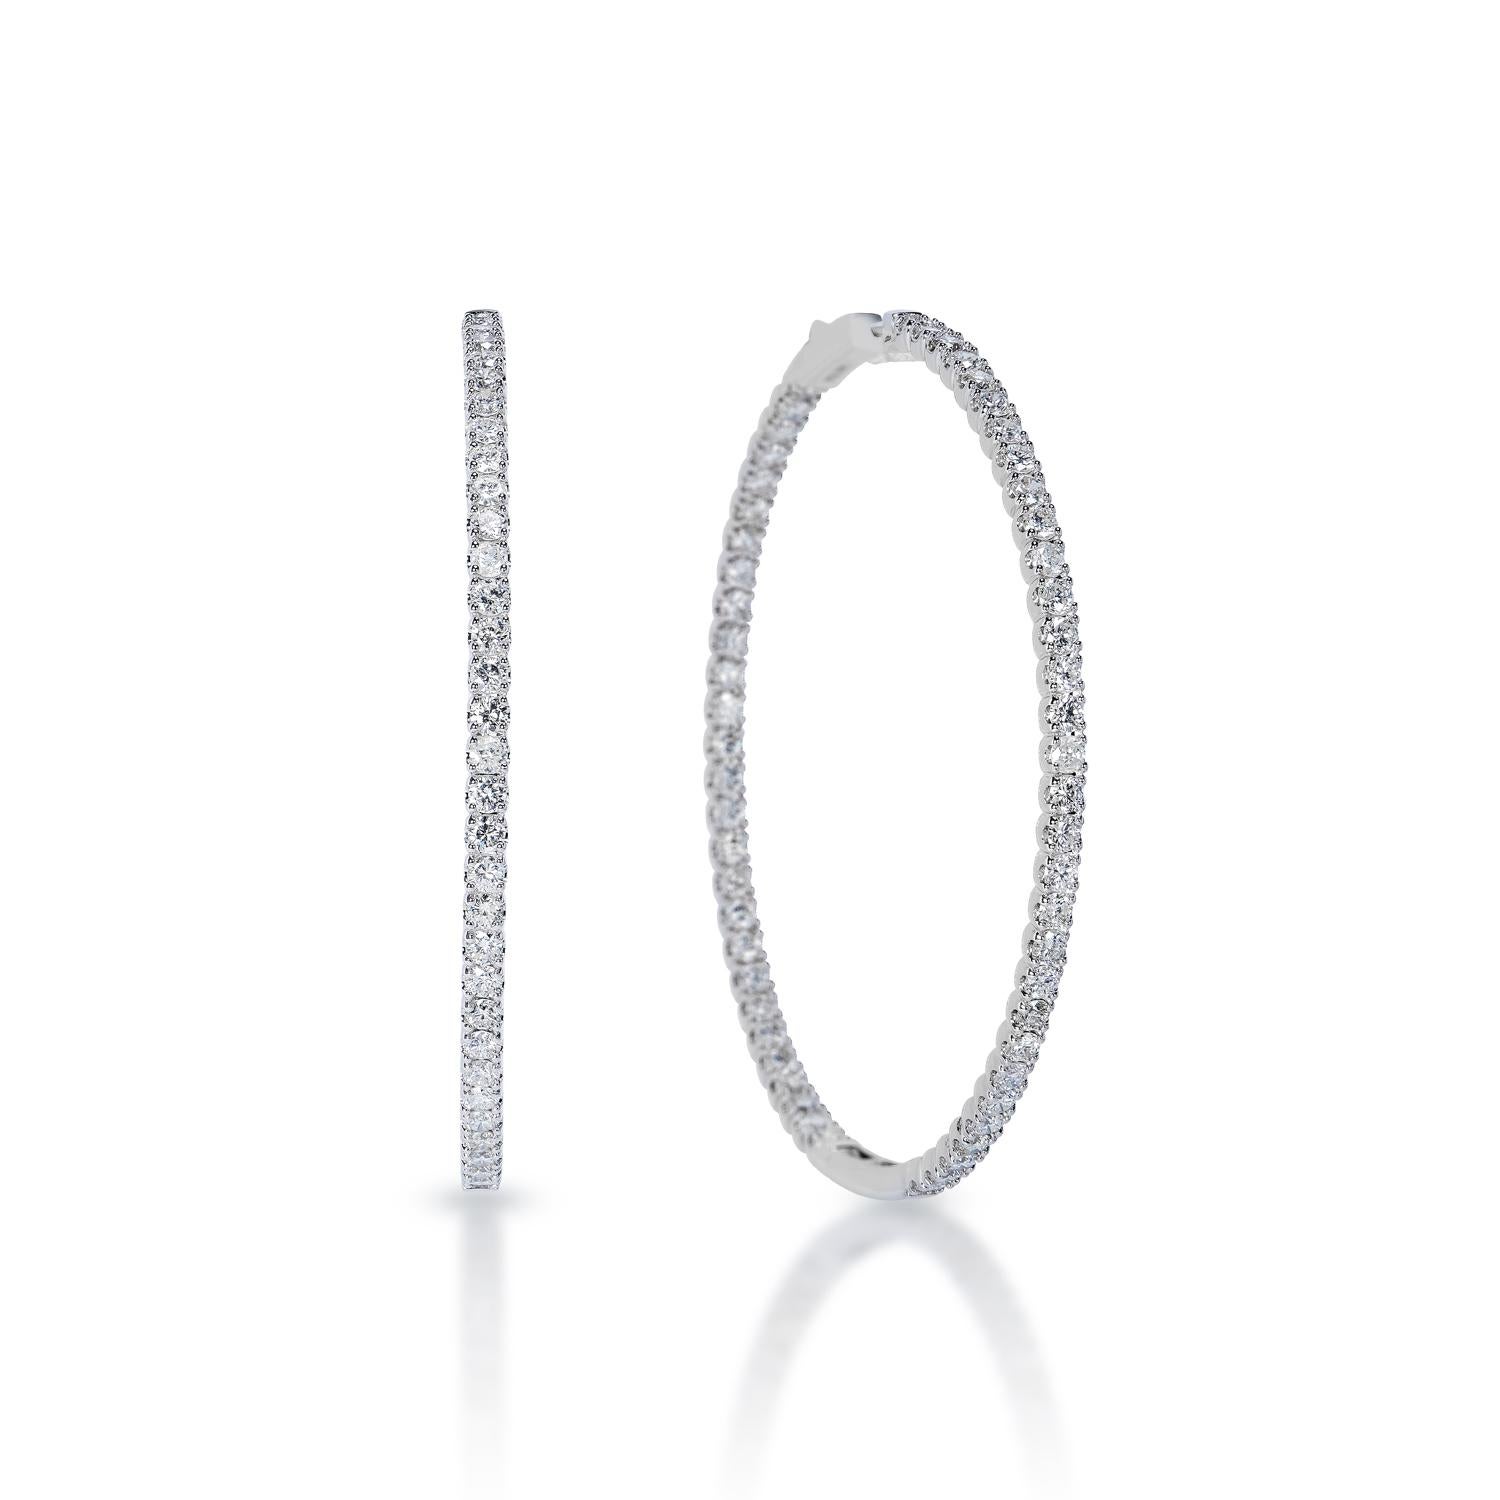 Diamond Hoop Earrings:

Carat Weight: 5.50 Carats E.E
Shape: Round Brilliant Cut
Metal: 14 Karat White Gold
Style: Hoop Earrings